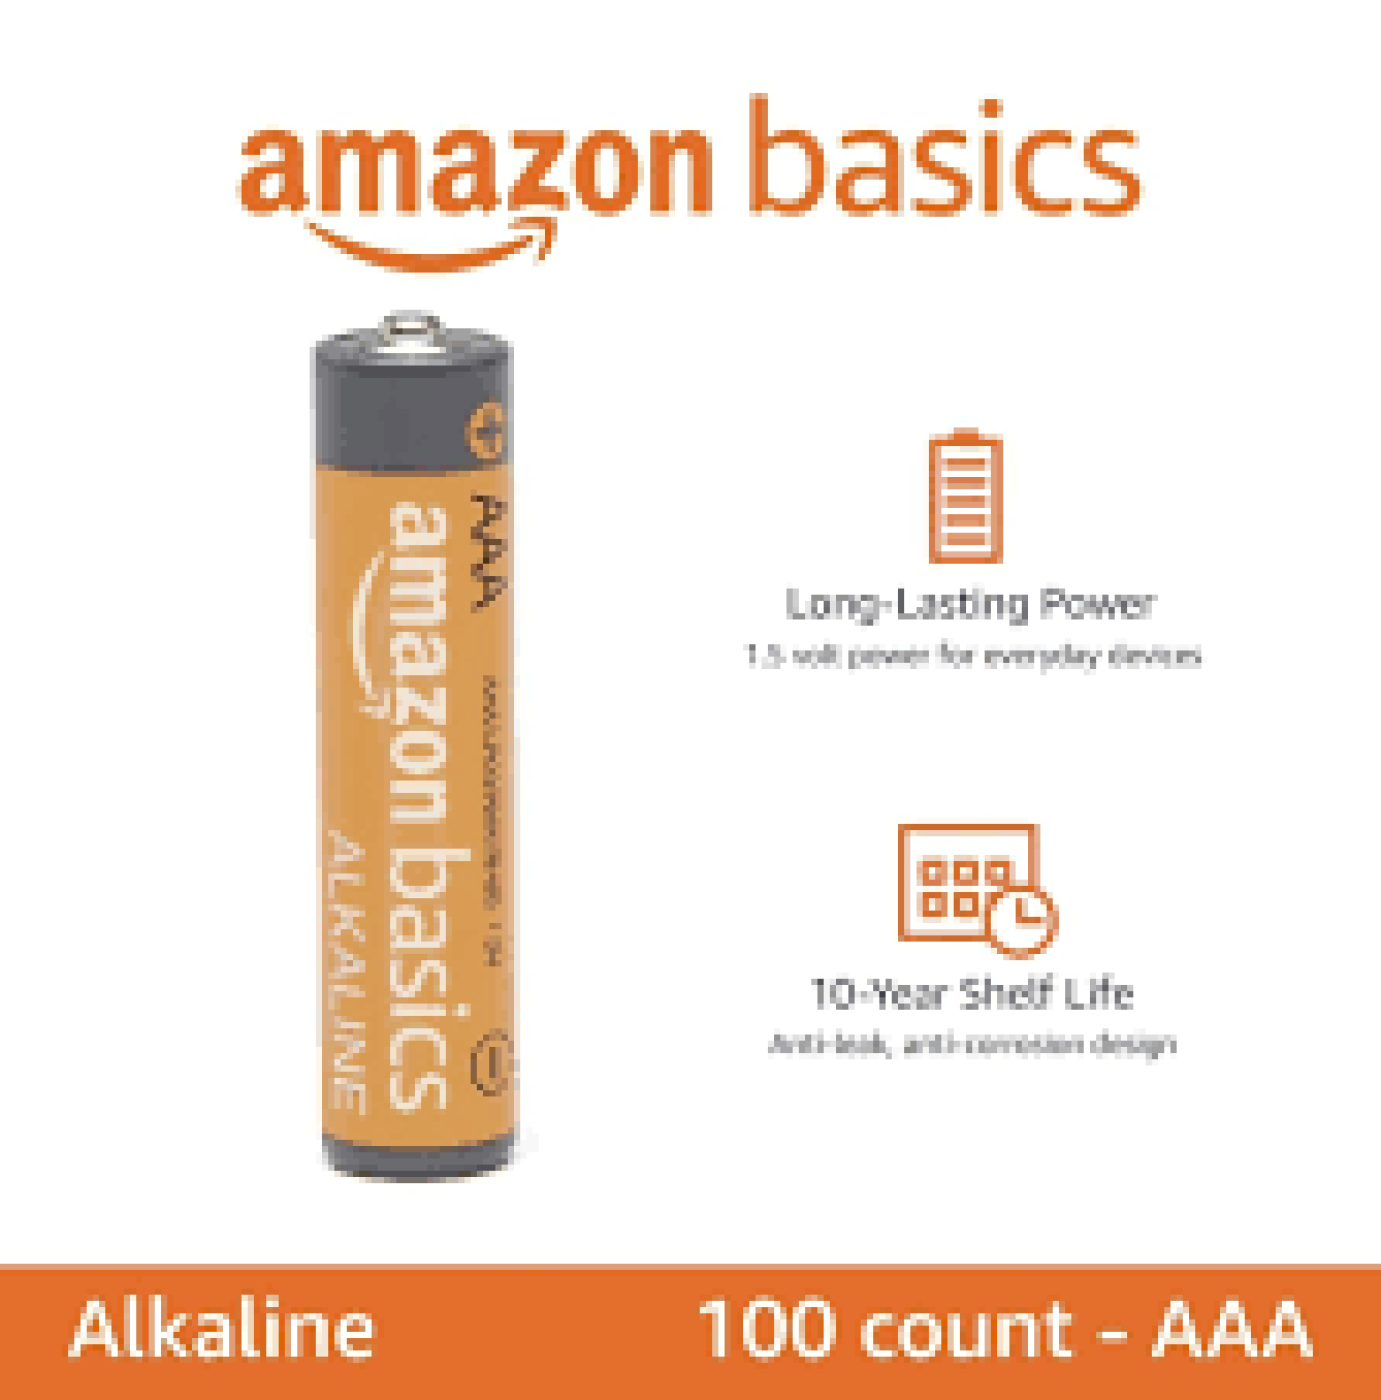 1 viên pin AAA Alkeline Amazon basics hàng xuất mỹ. Date 2033